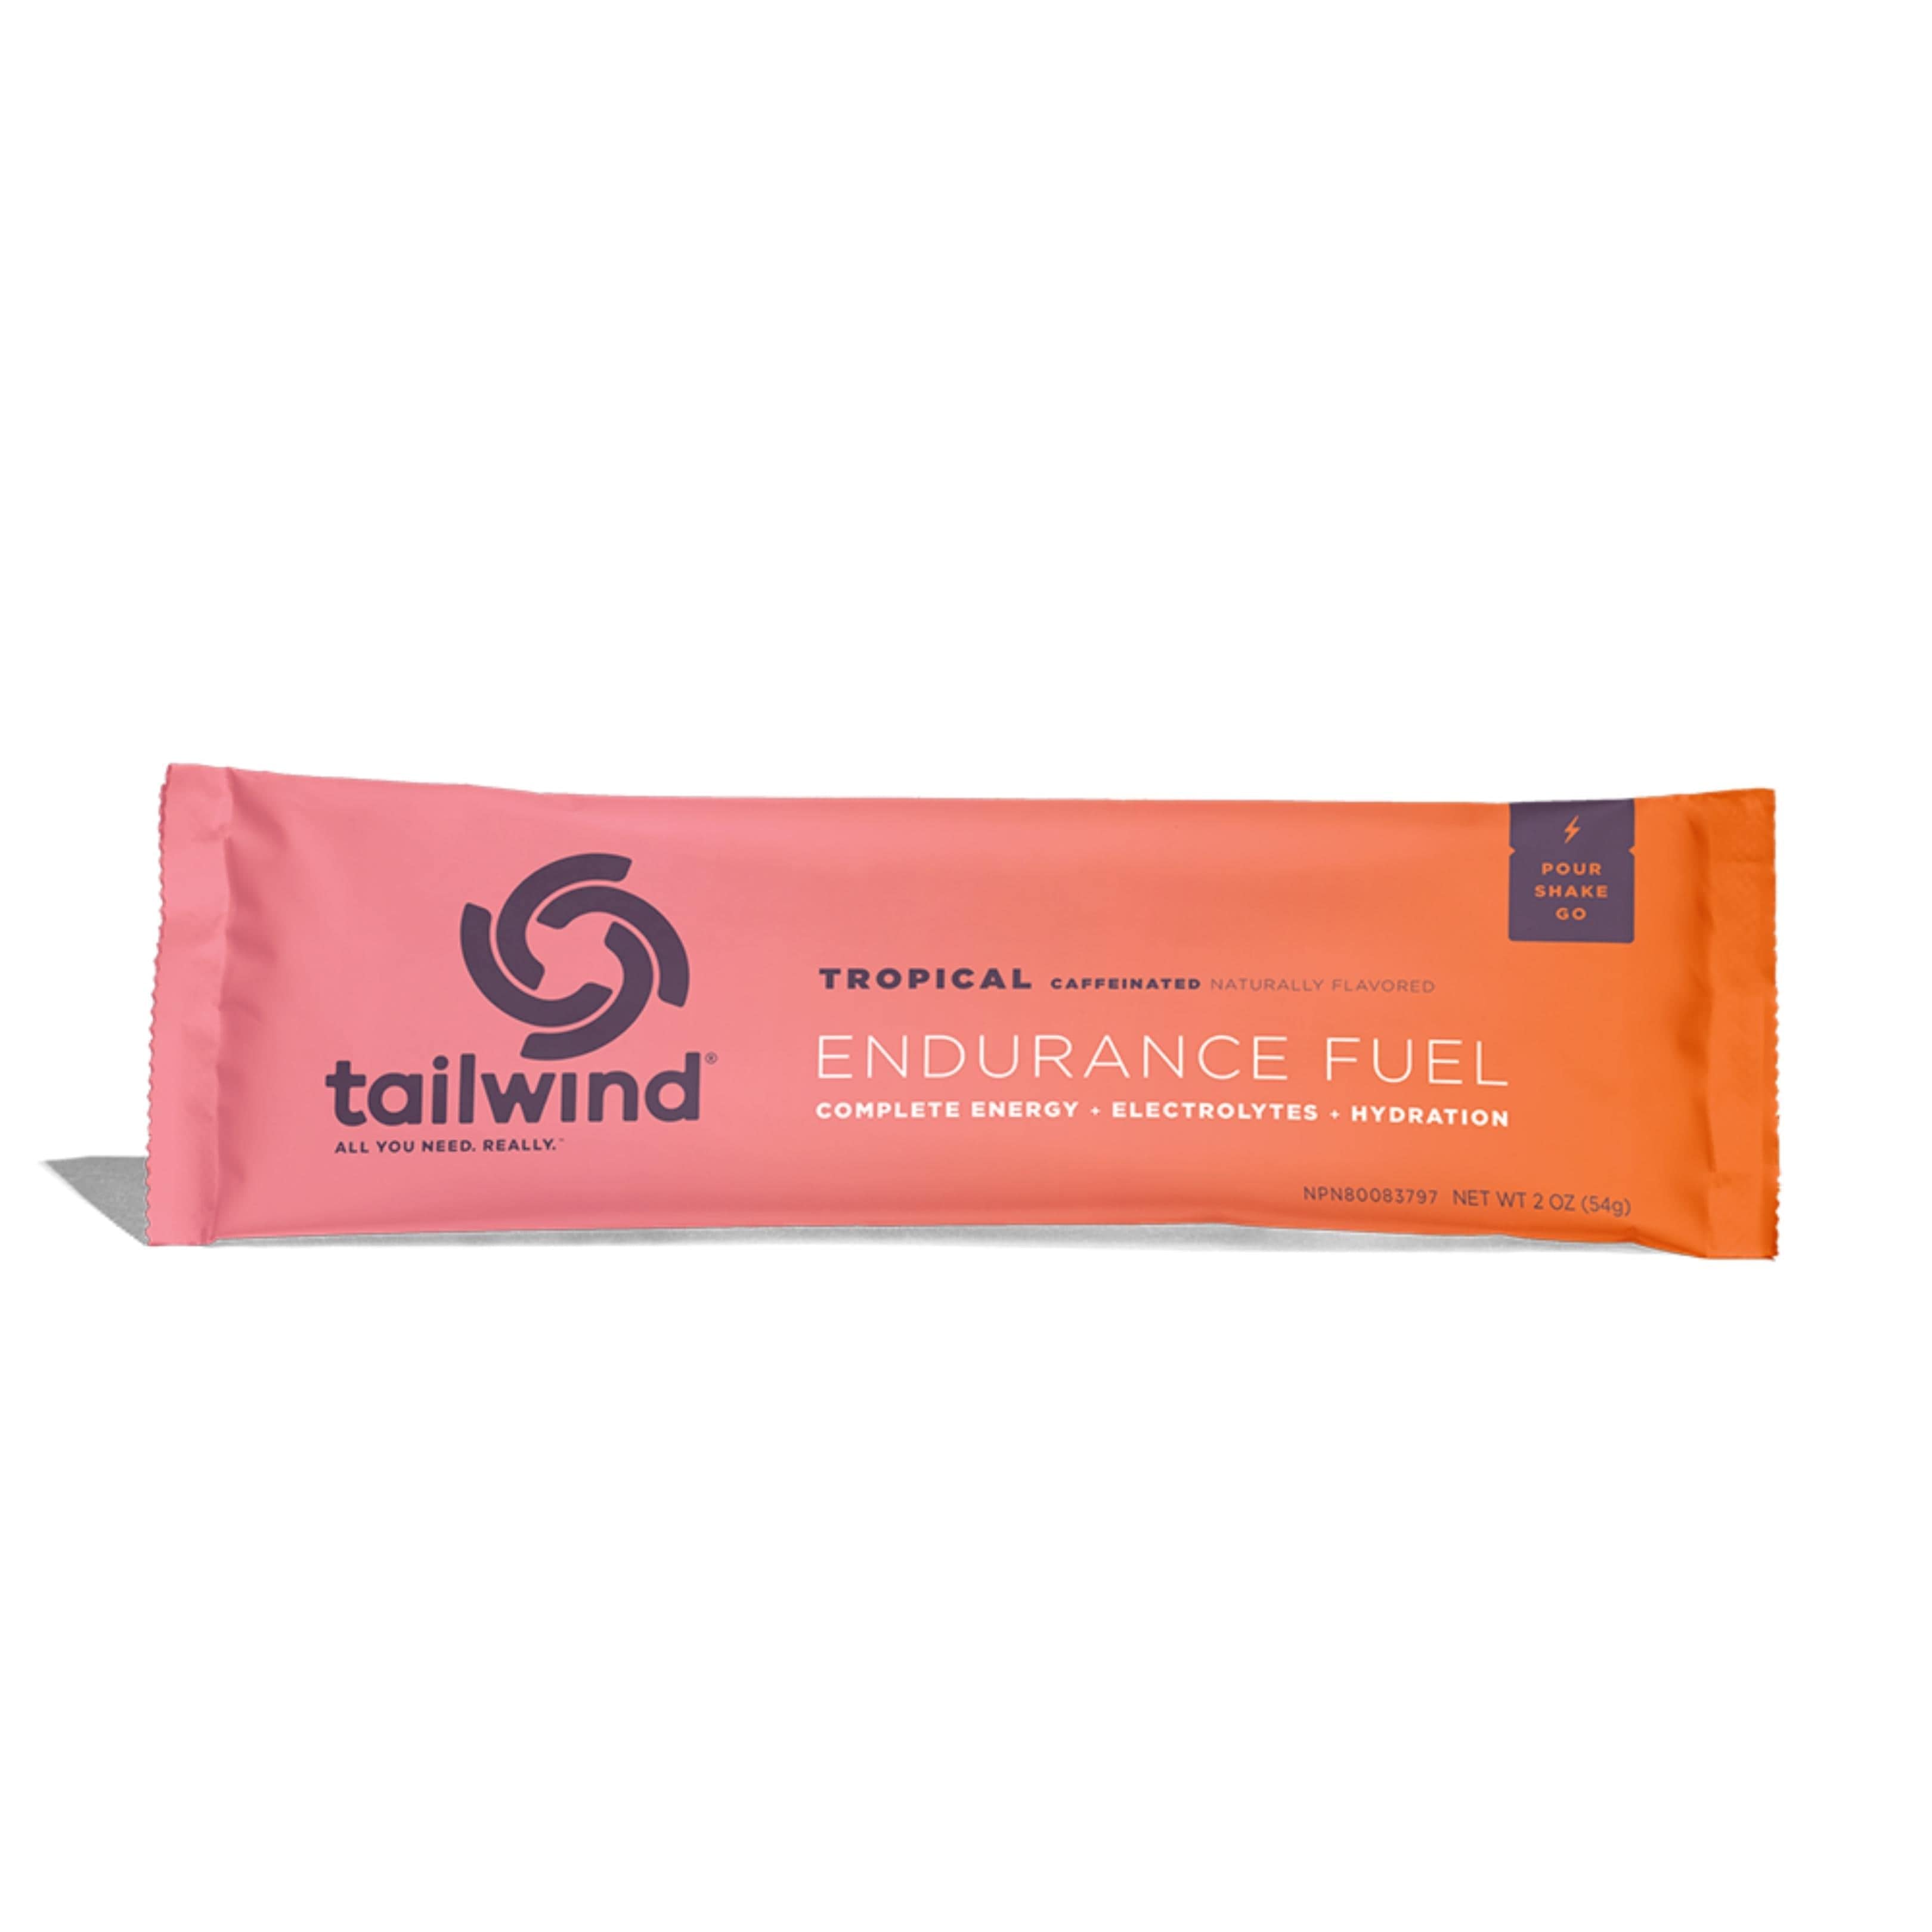 tailwind Nutrition Supplement Stick (2 servings) / Tropical (36mg Caffeine) Endurance Fuel Drink Mix 8 55283 00519 4